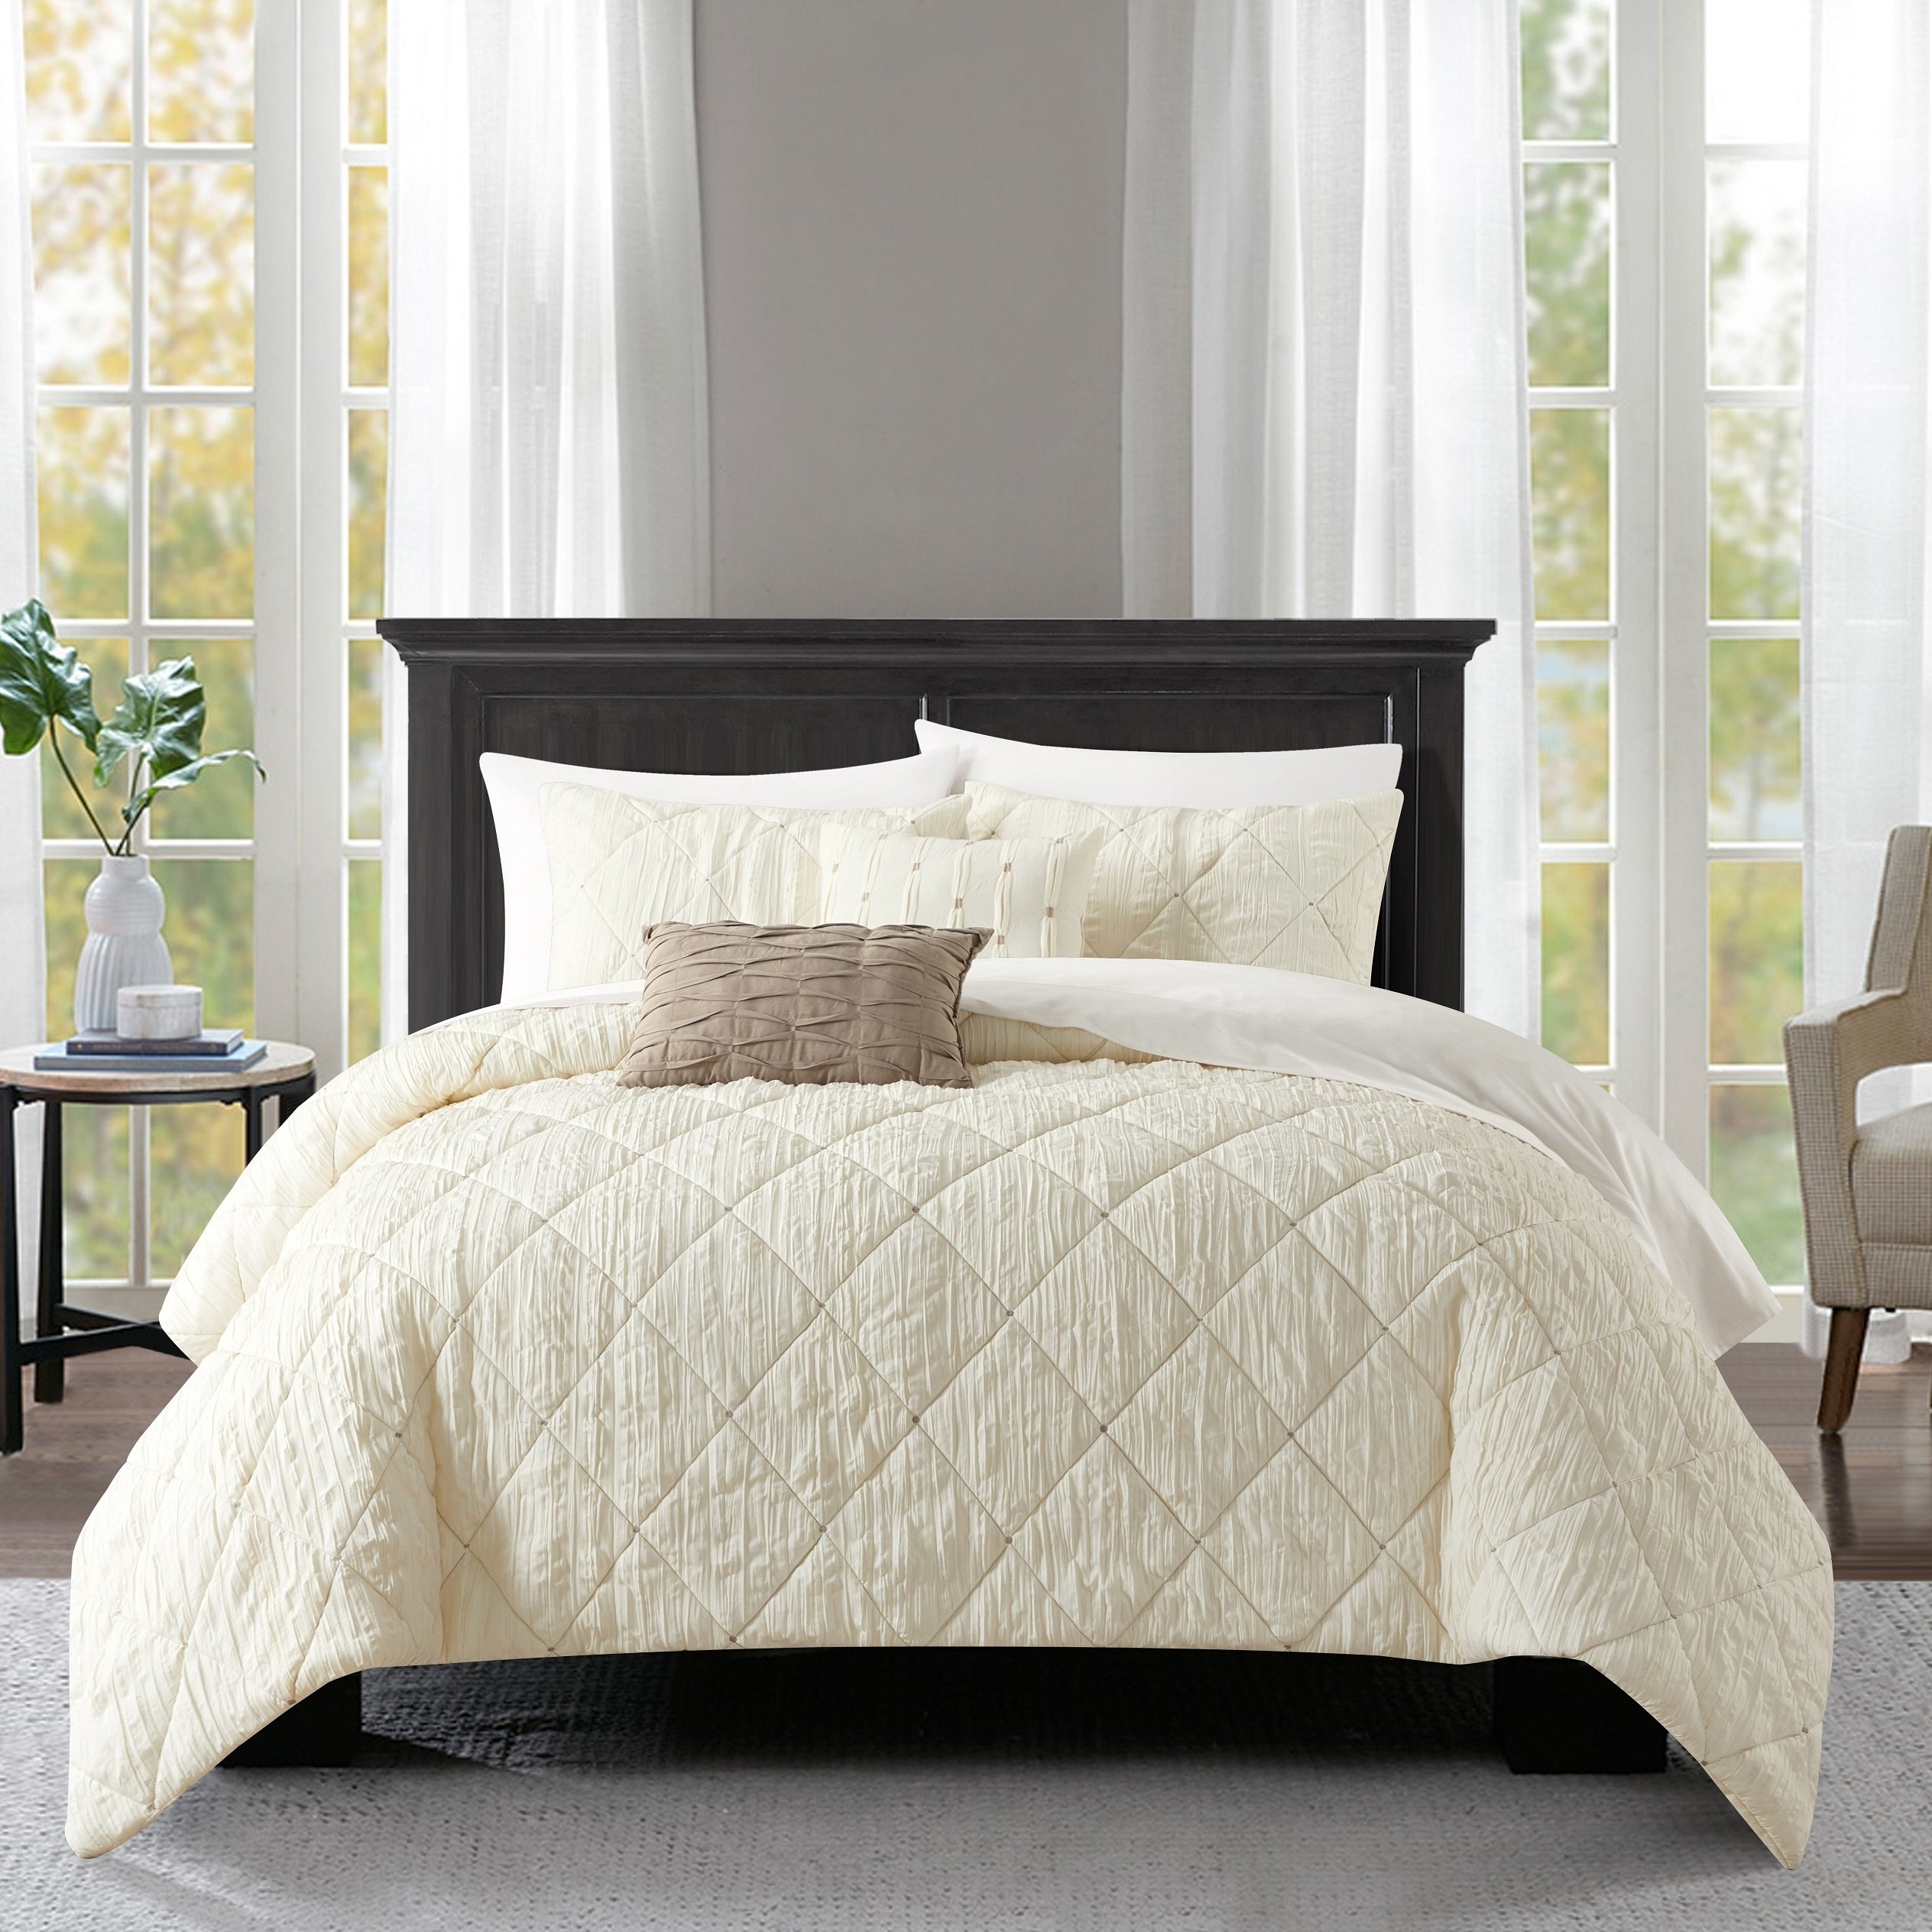 NY&CO Home Deighton 5 Piece Comforter Set Diamond Stitched Design Crinkle - Grey, King